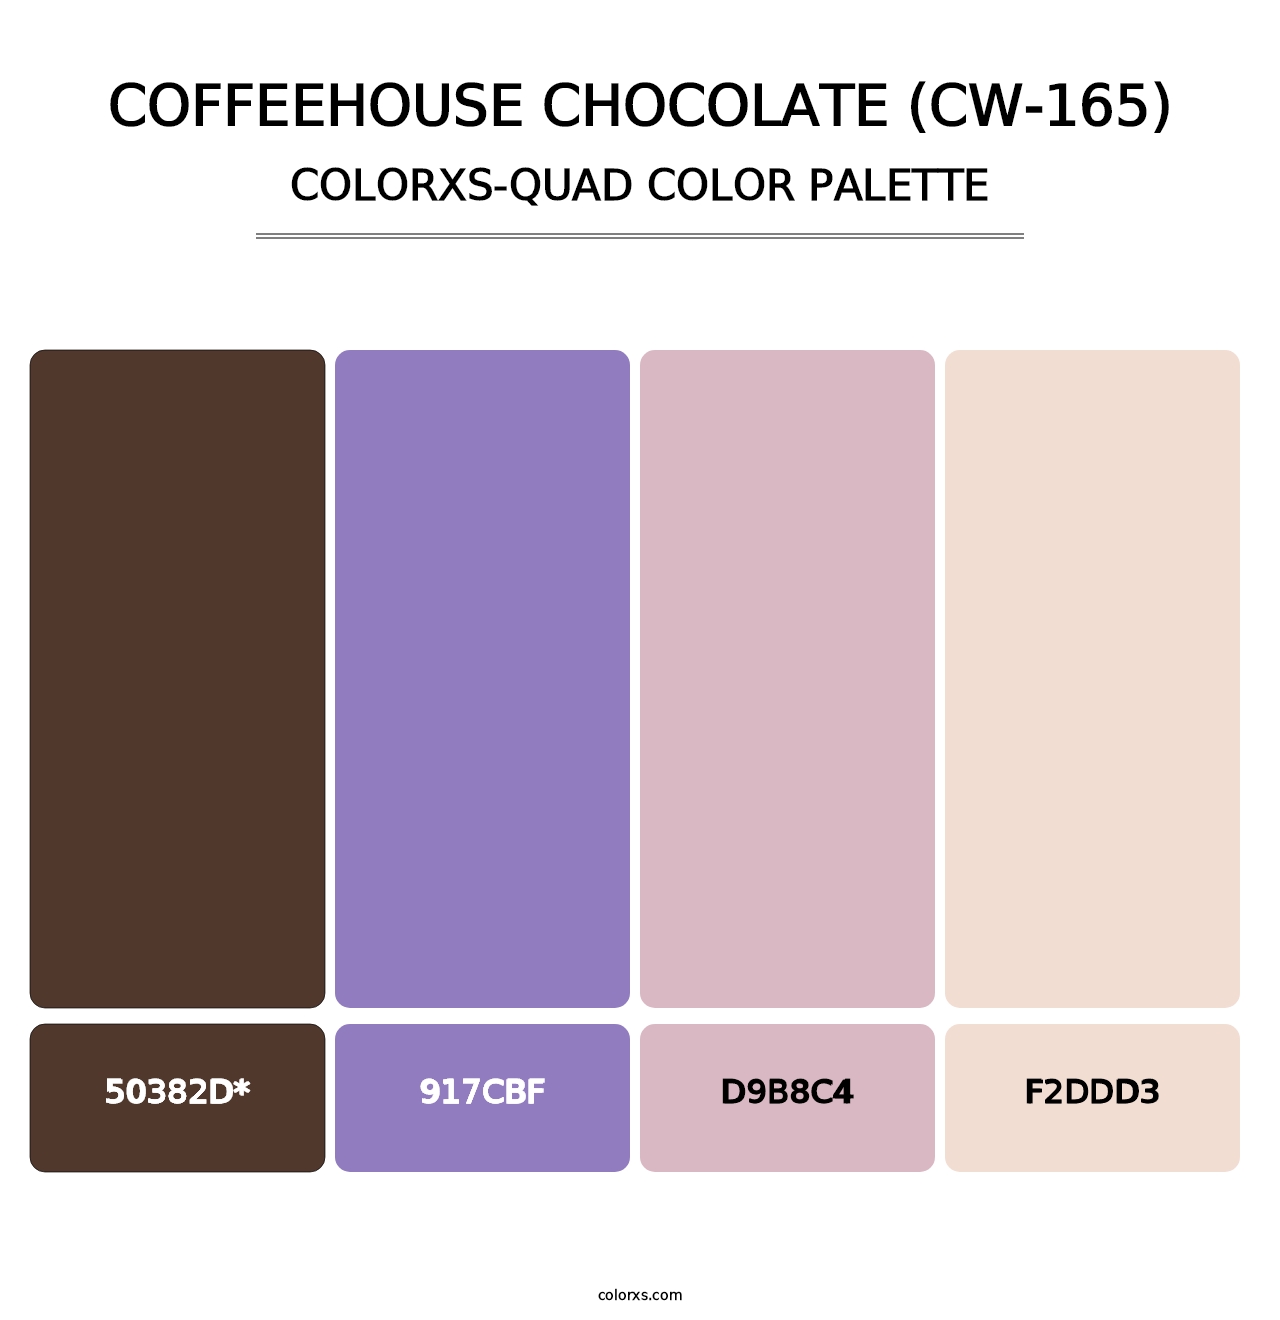 Coffeehouse Chocolate (CW-165) - Colorxs Quad Palette